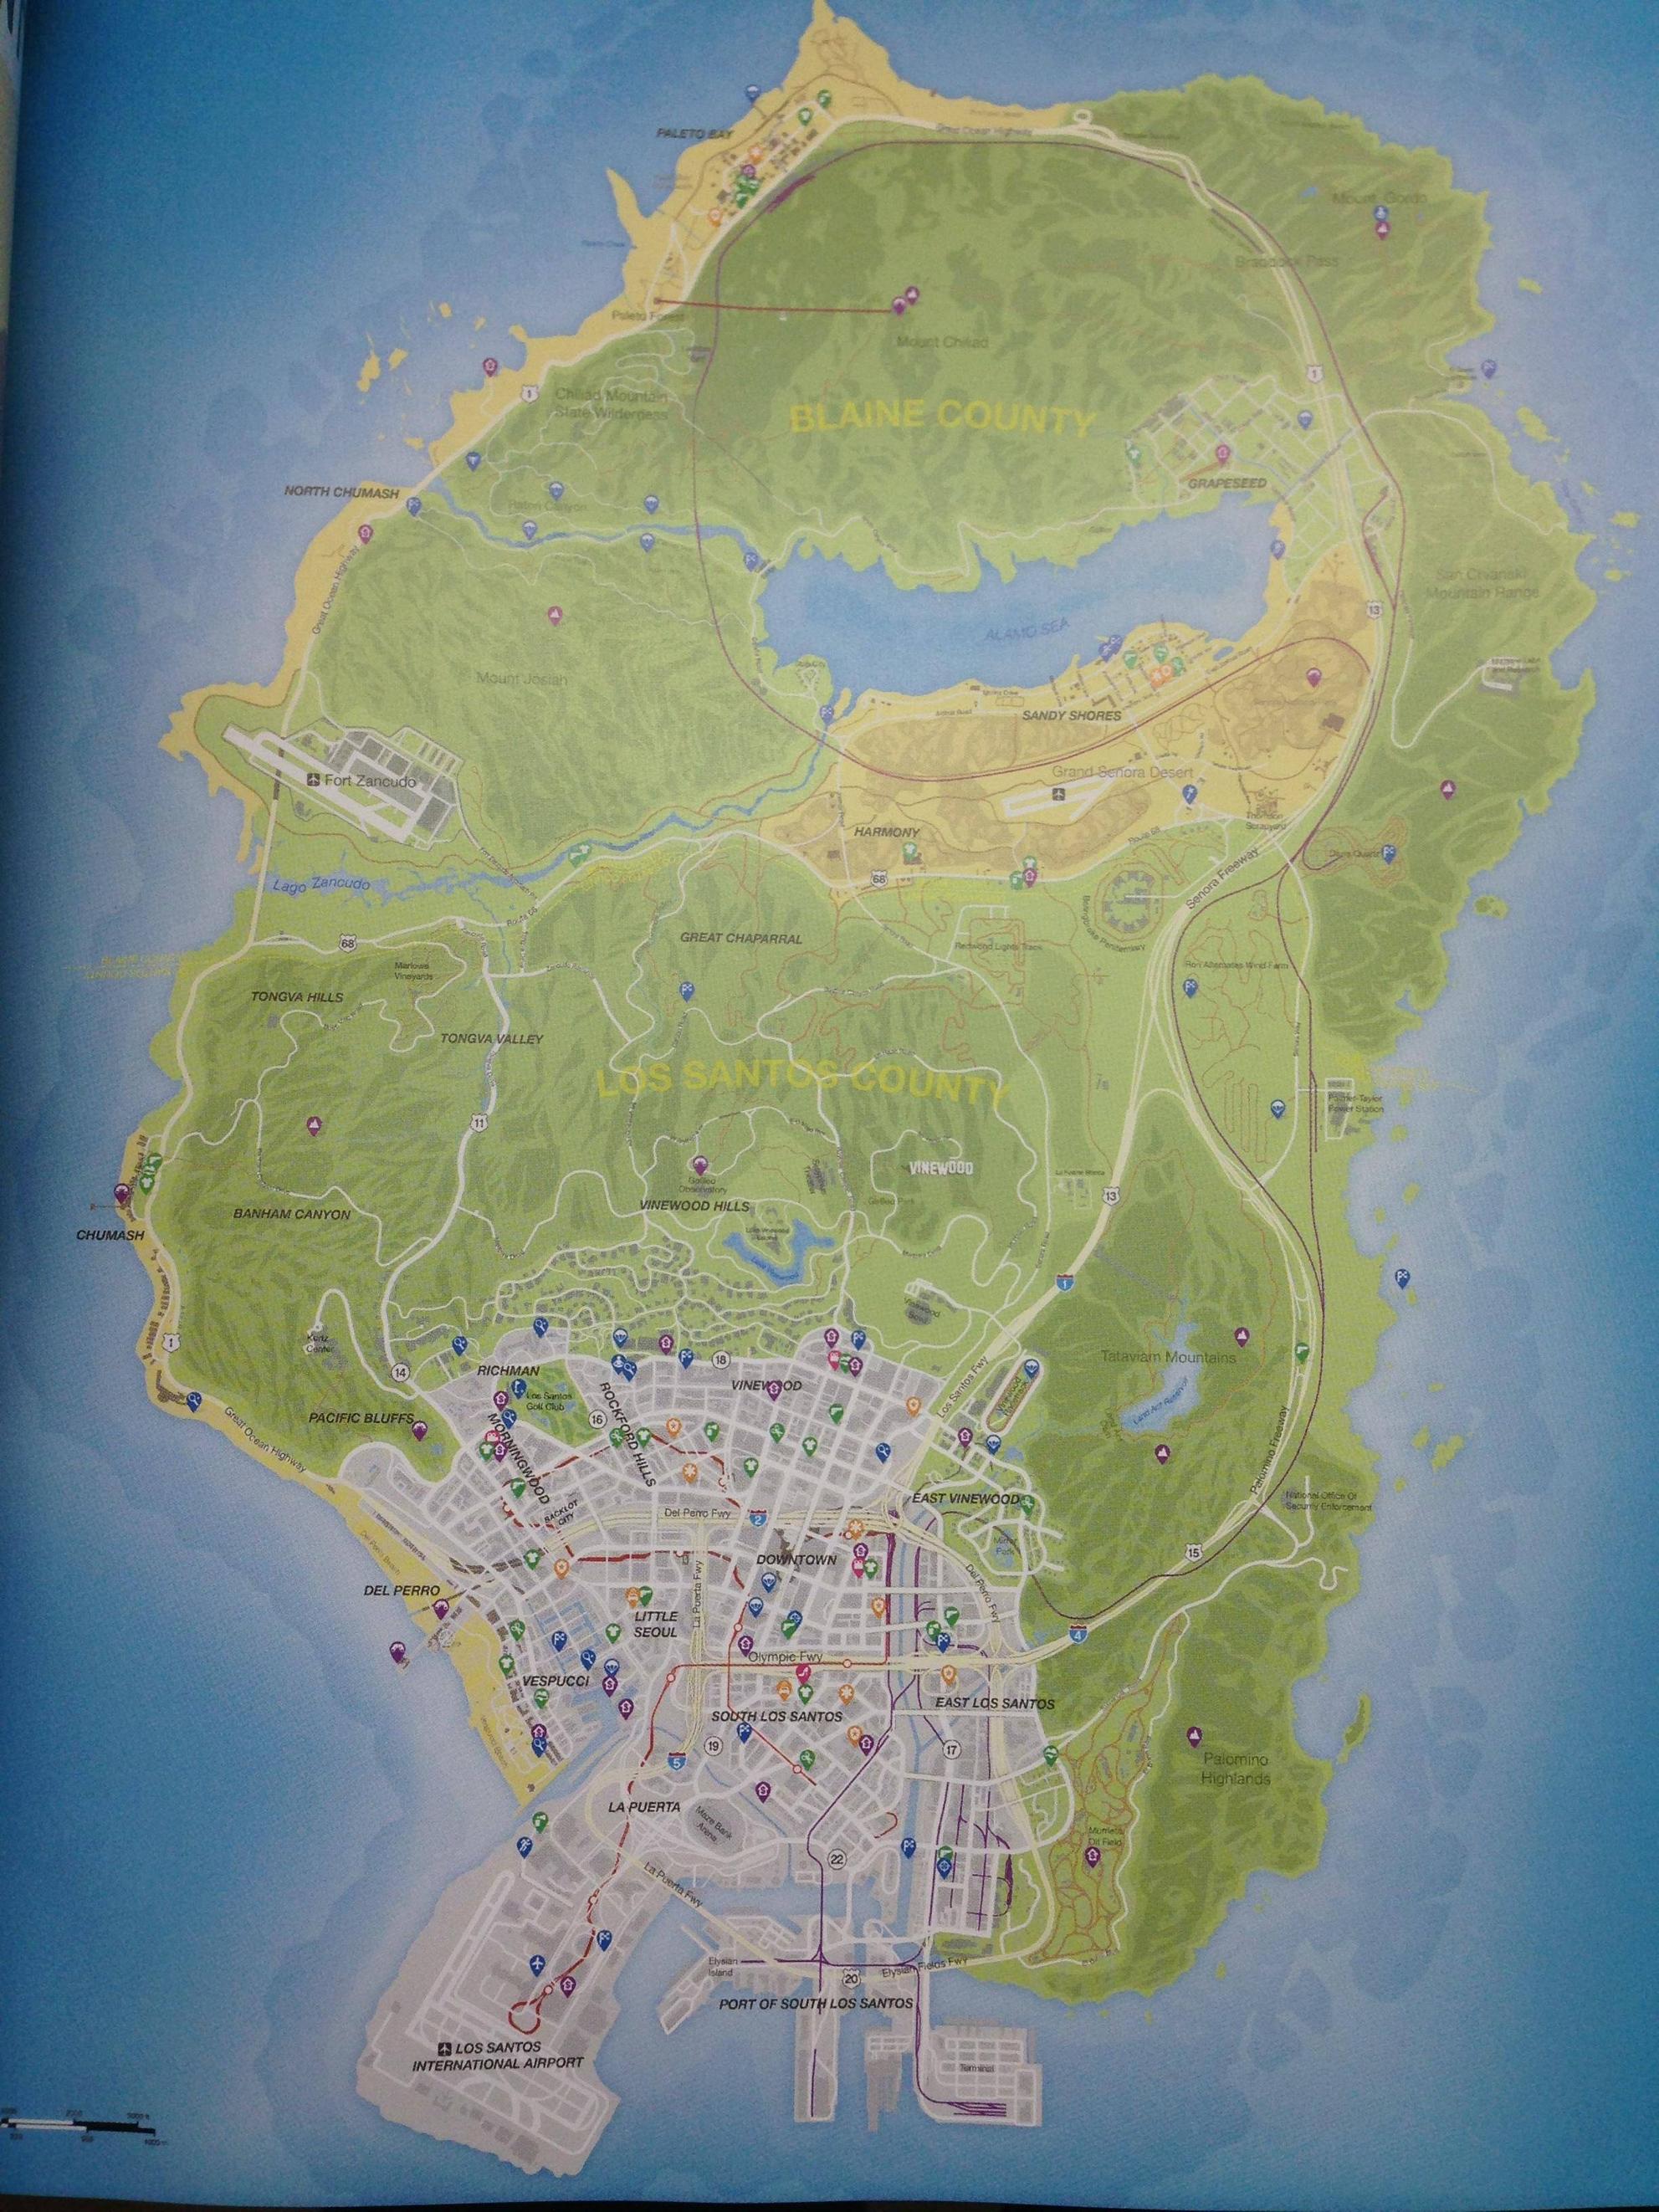 Physical Location Map of Los Santos